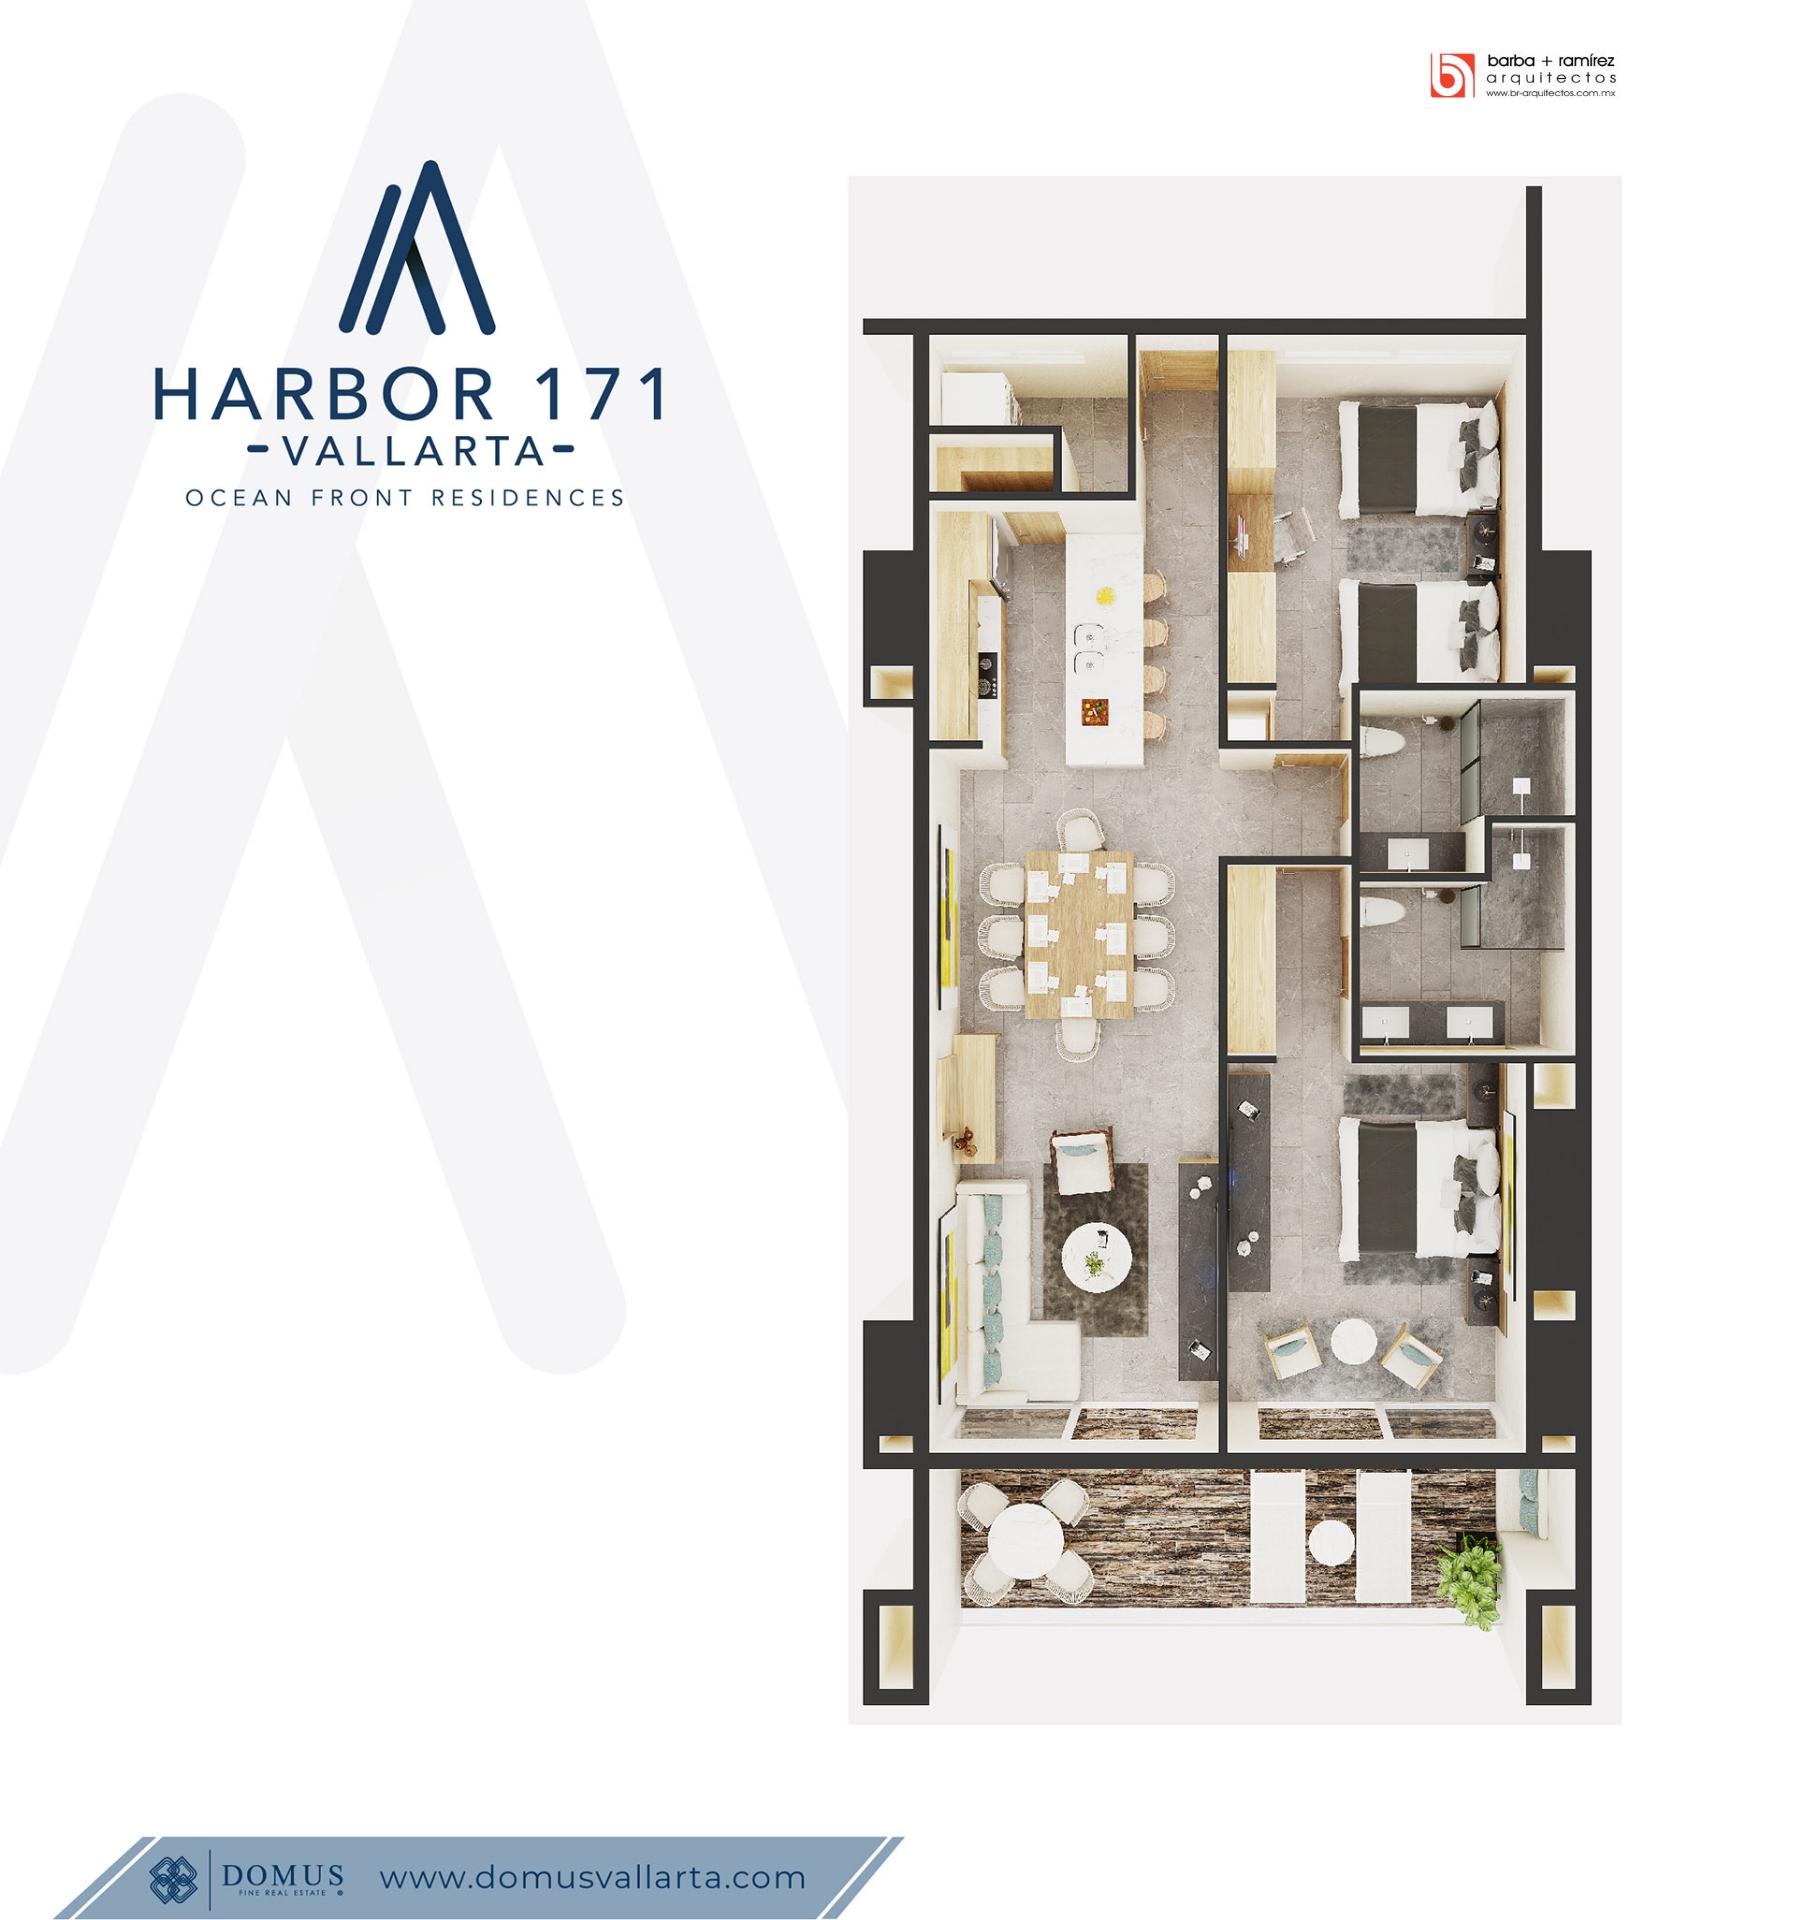 Unit 2206 Blueprint - Harbor 171